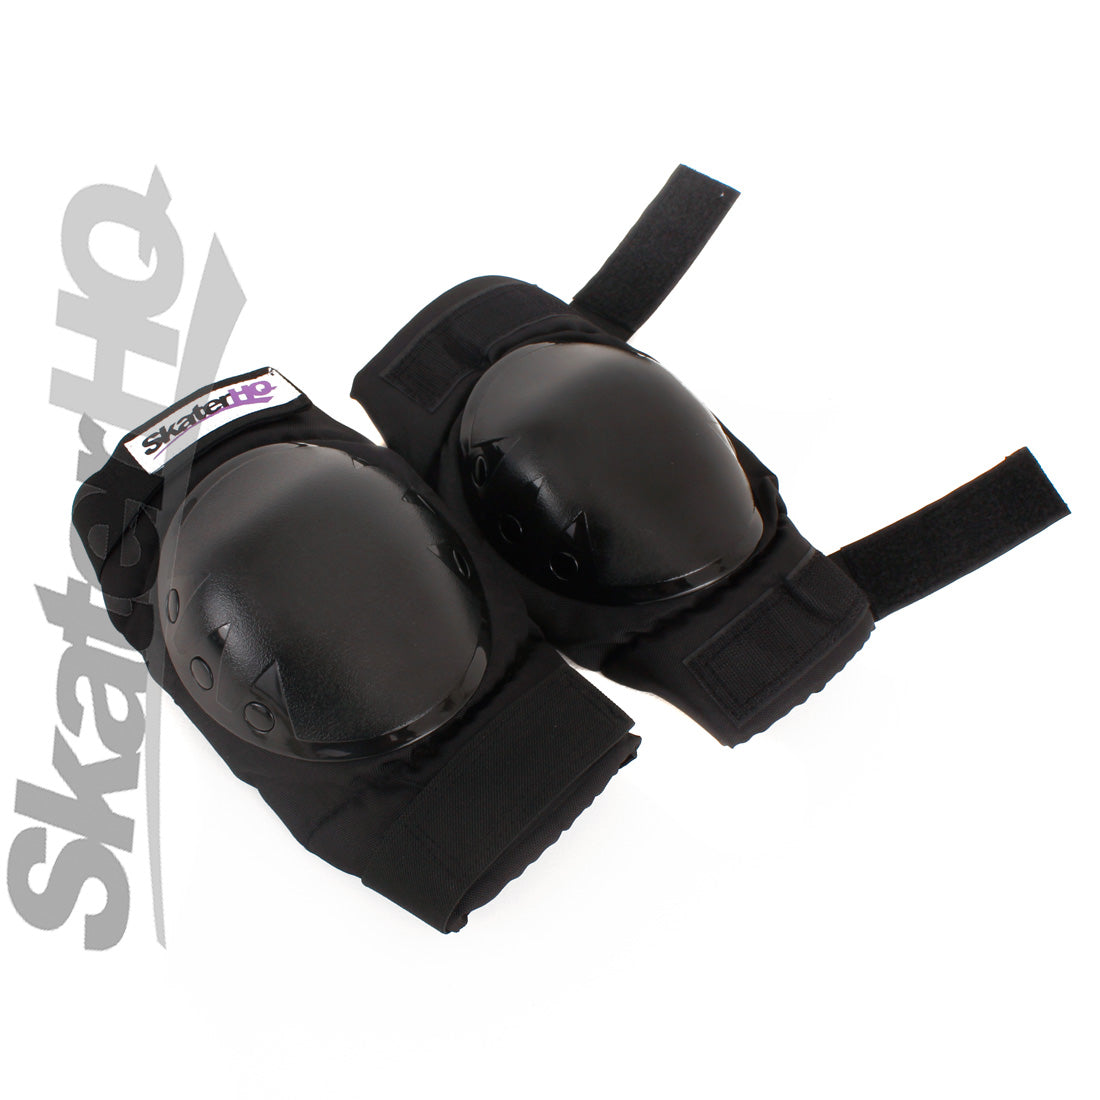 Skater HQ Knee Pads - Medium Protective Gear